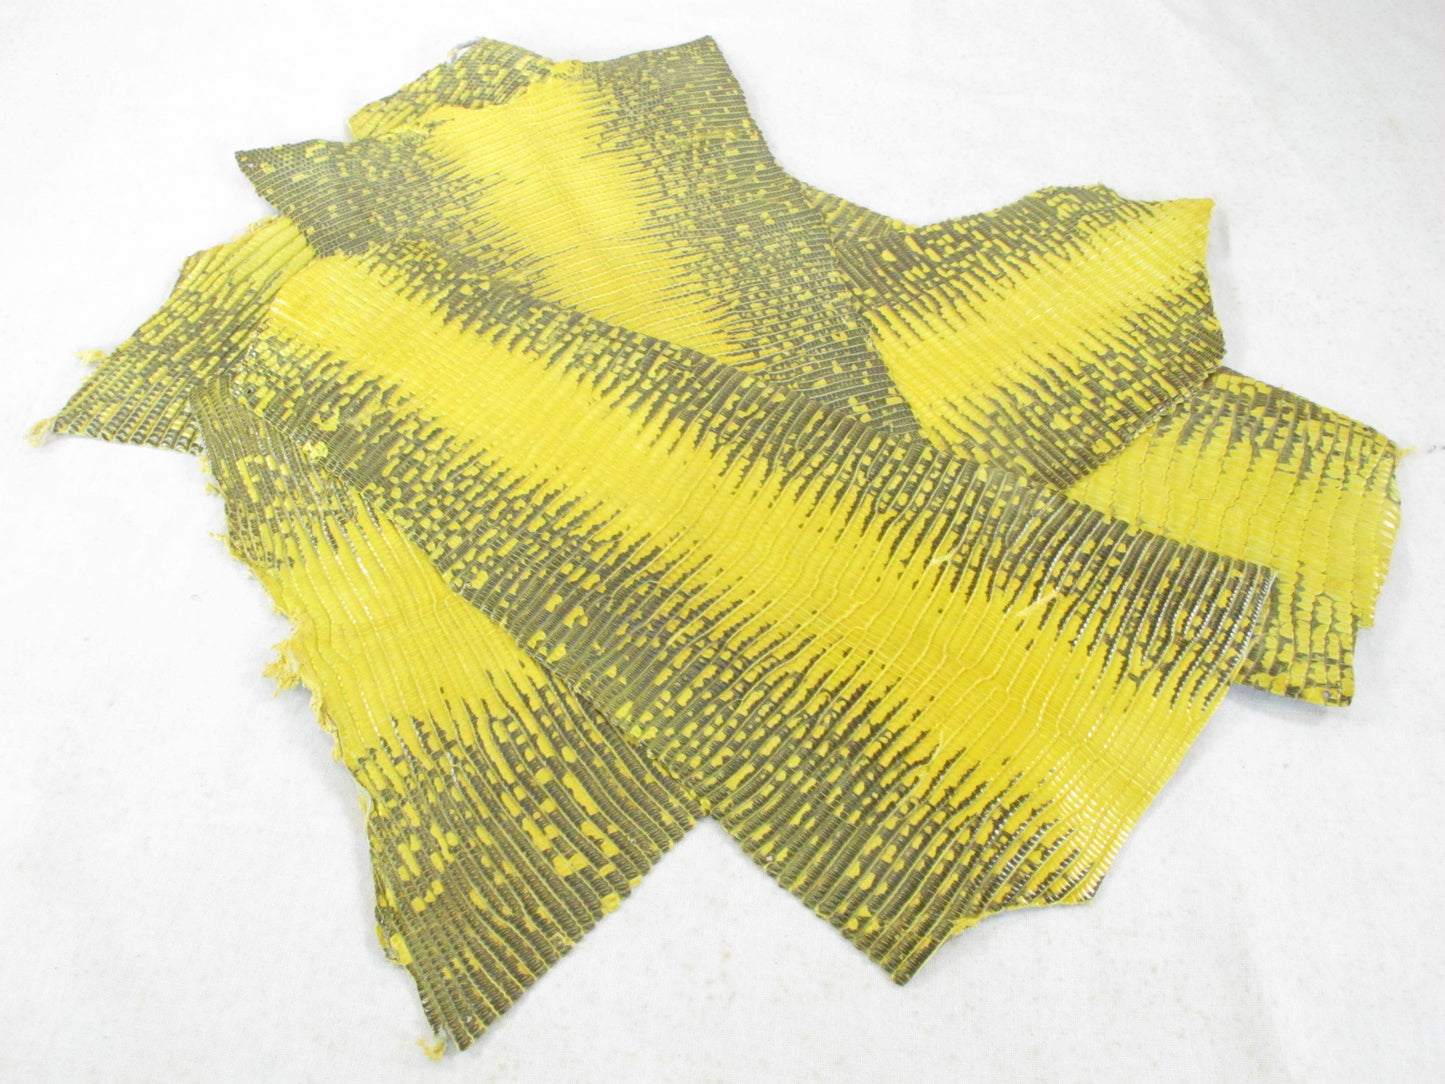 Genuine Lizard Skin Leather Scraps Hide Pelt 100 grams